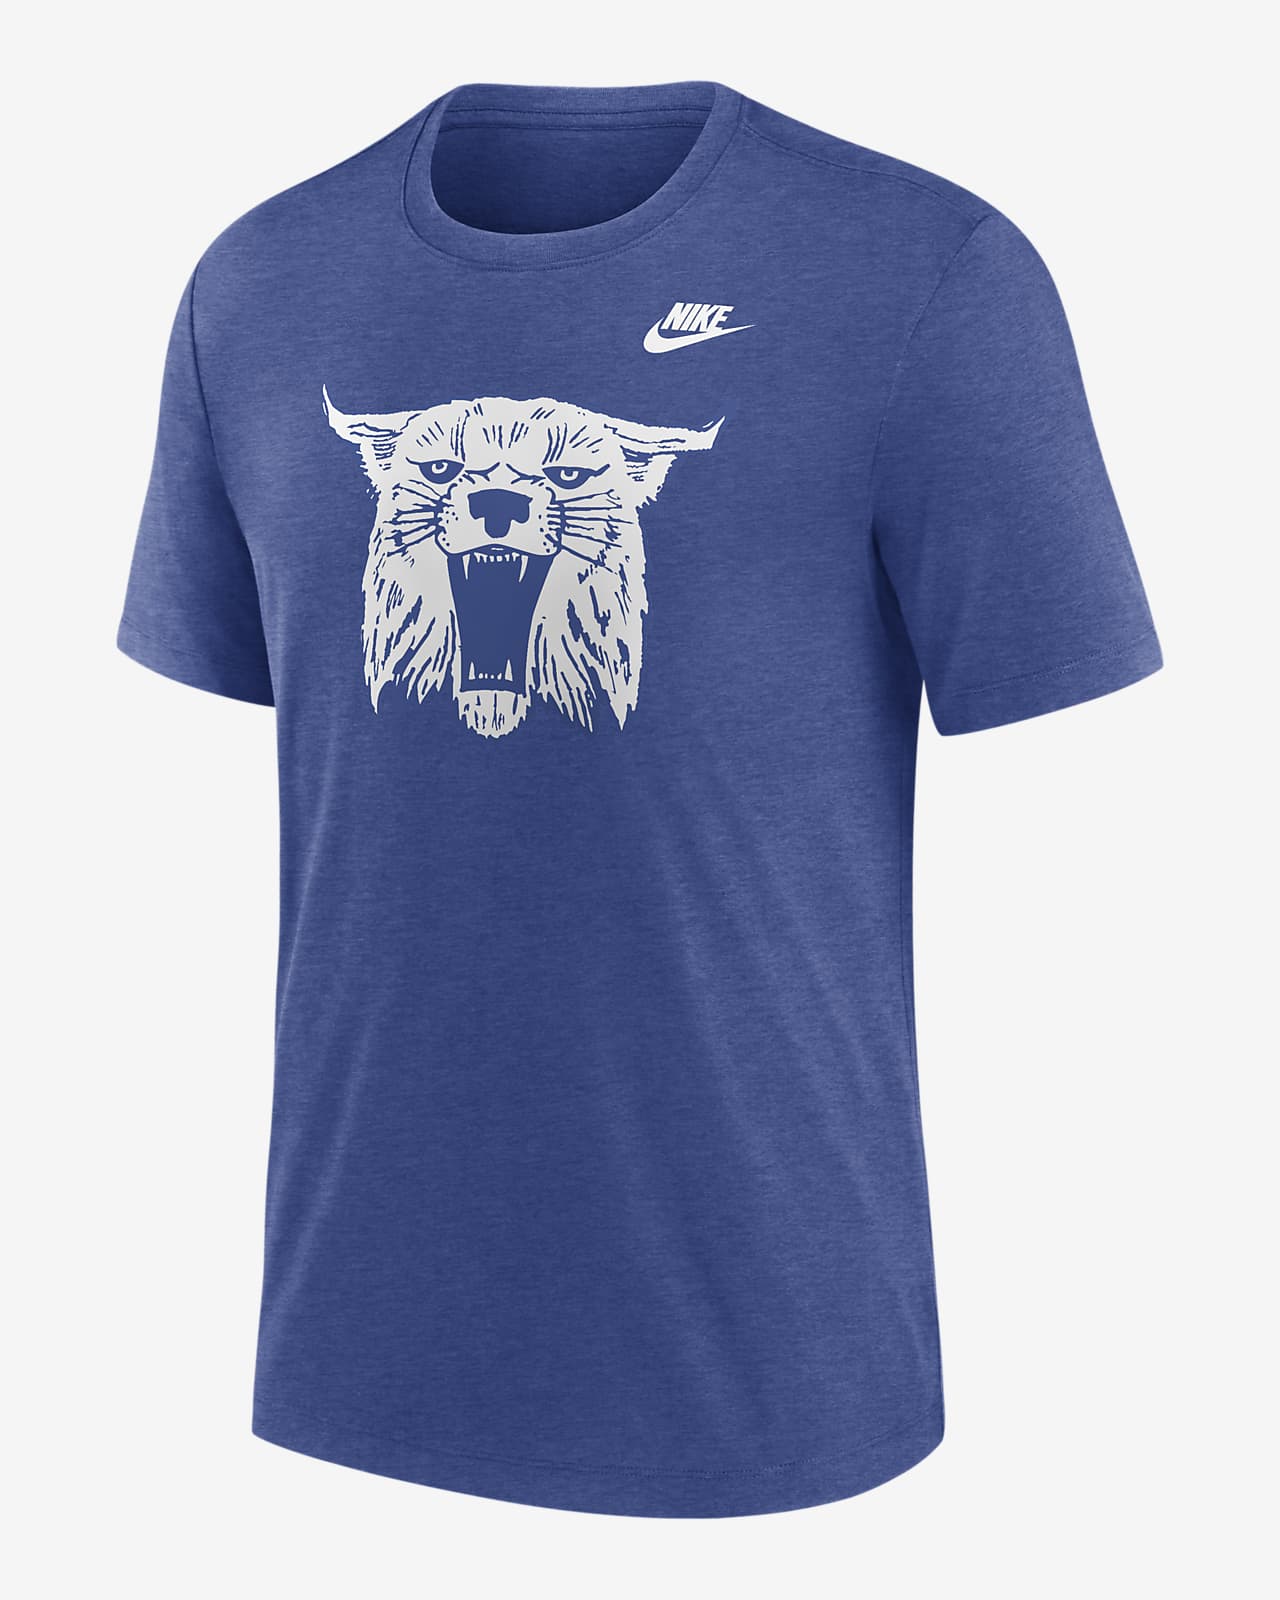 Kentucky Wildcats Blitz Evergreen Legacy Primary Men's Nike College T-Shirt